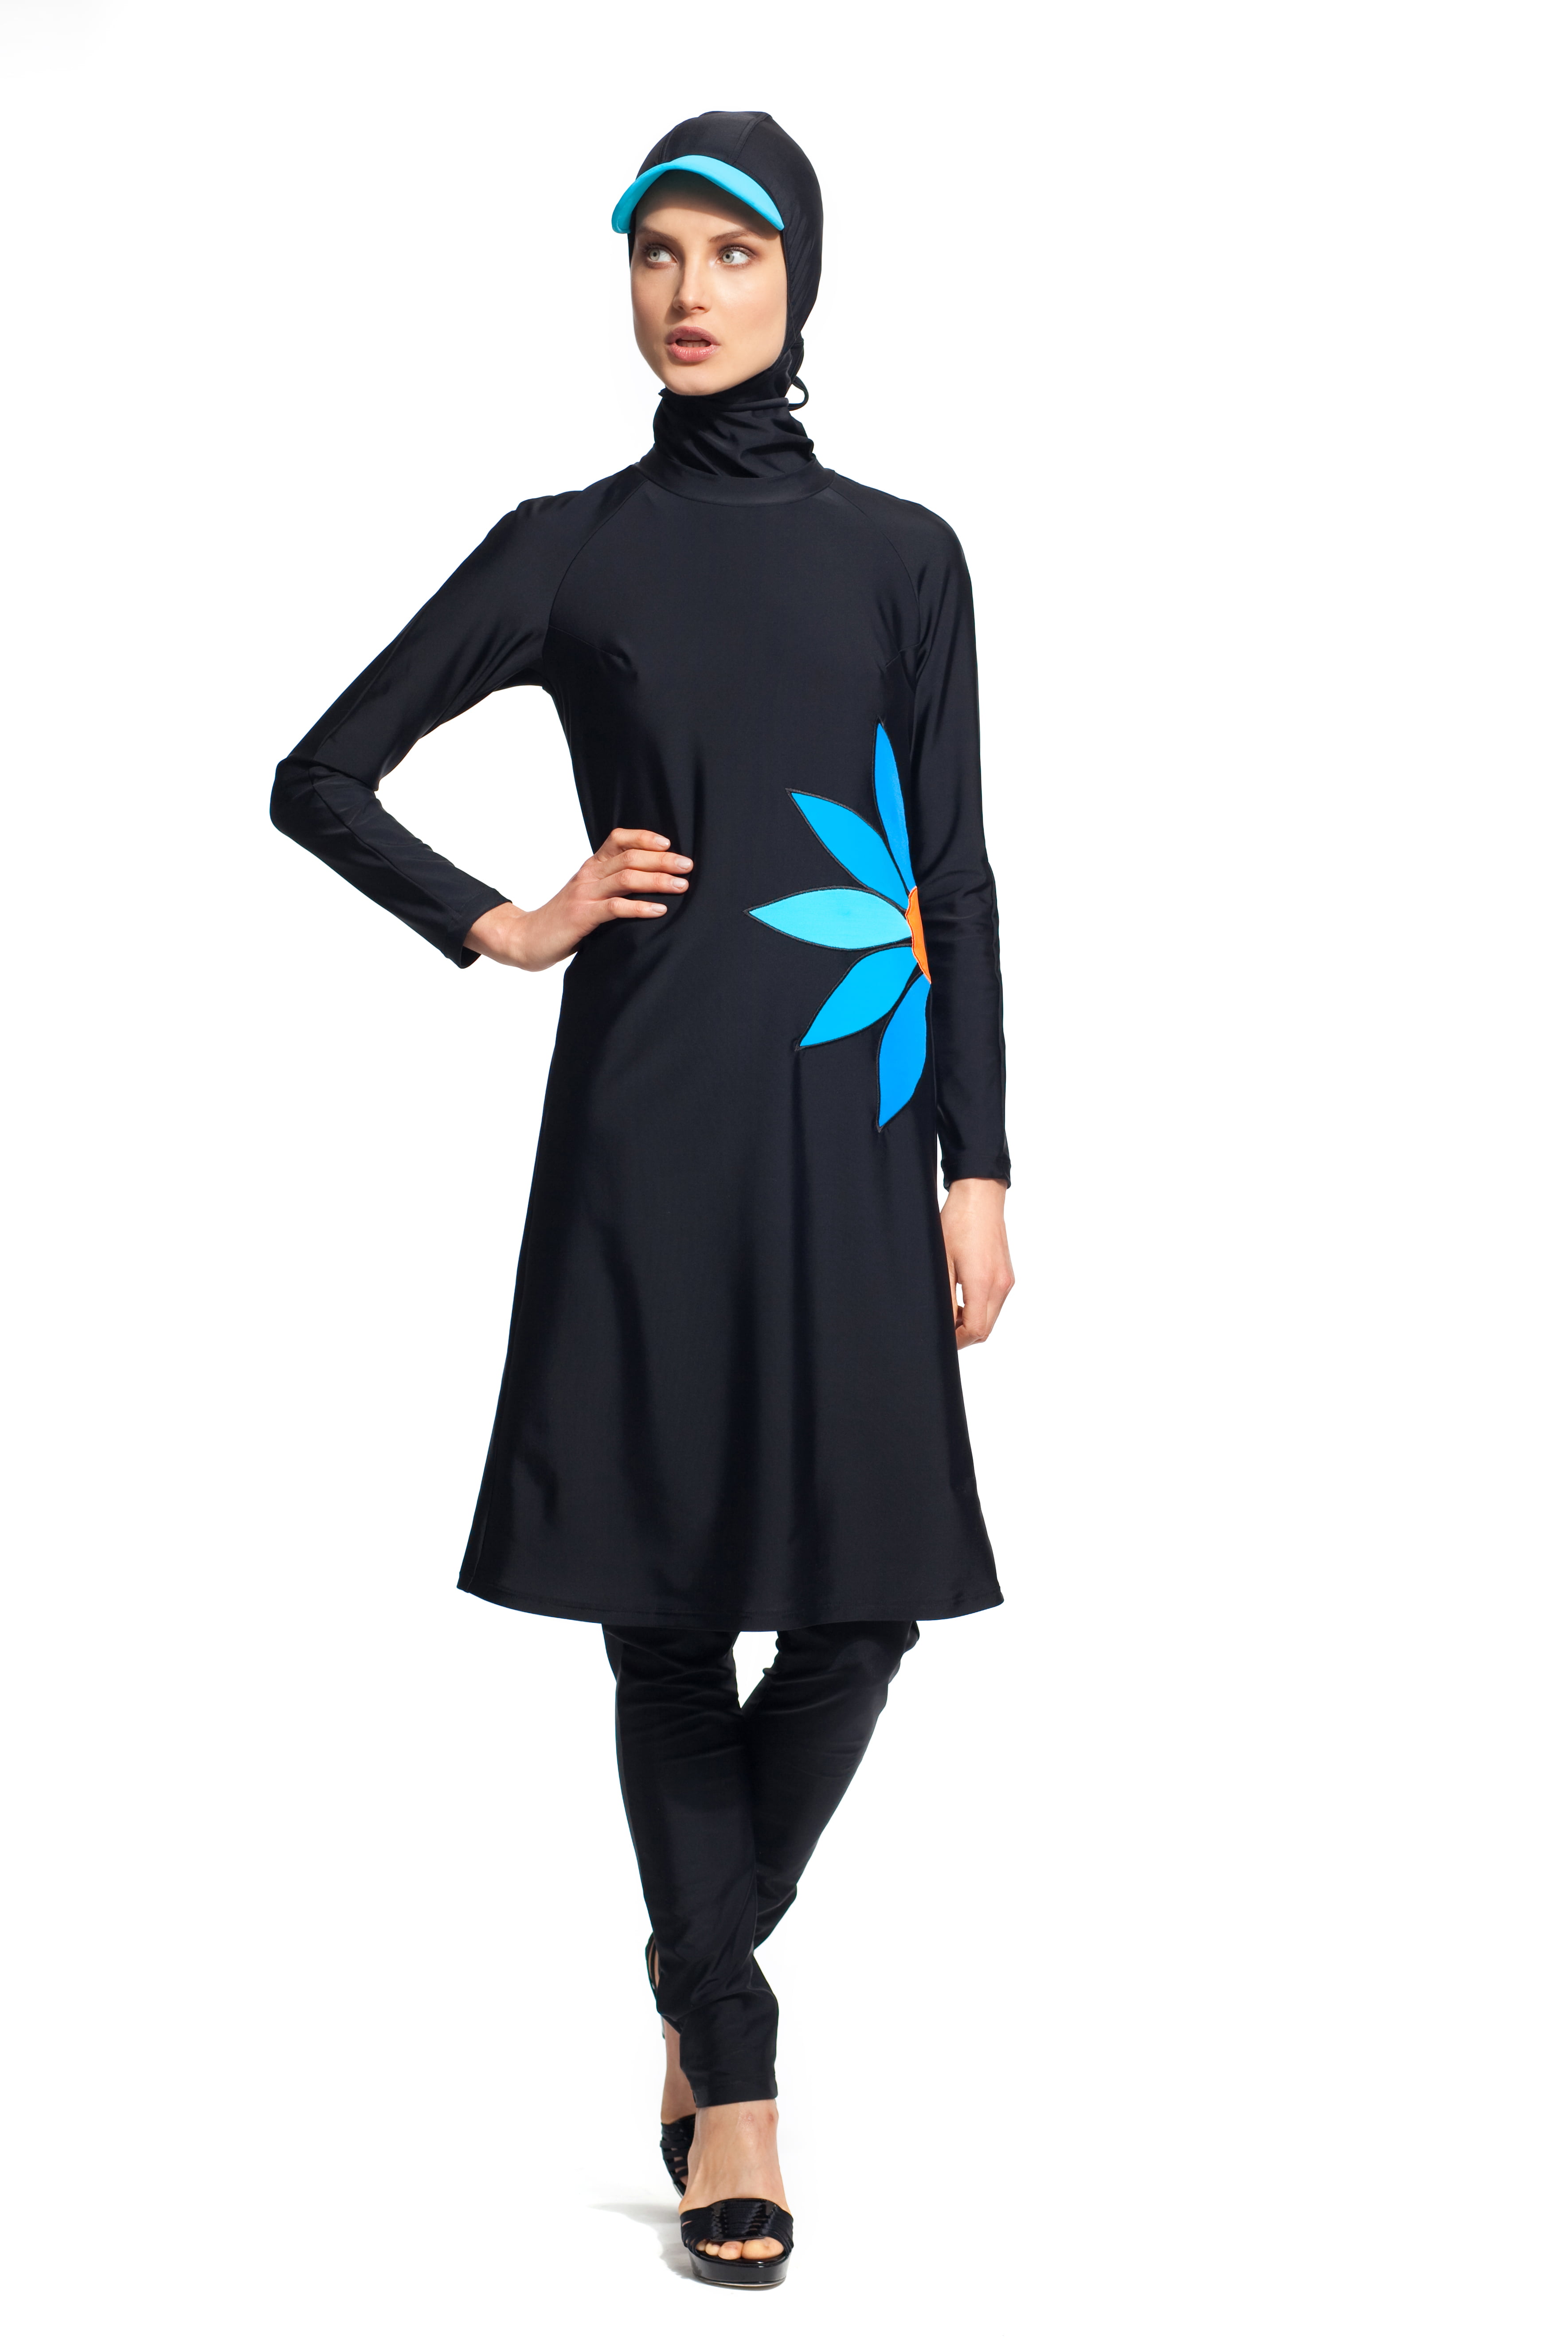 KXCFCYS Muslim Swimsuit Modest Swimsuits Islamic Swimsuits Swimwear Maillot Short Sleeve Women Swimsuit Islam Sale 